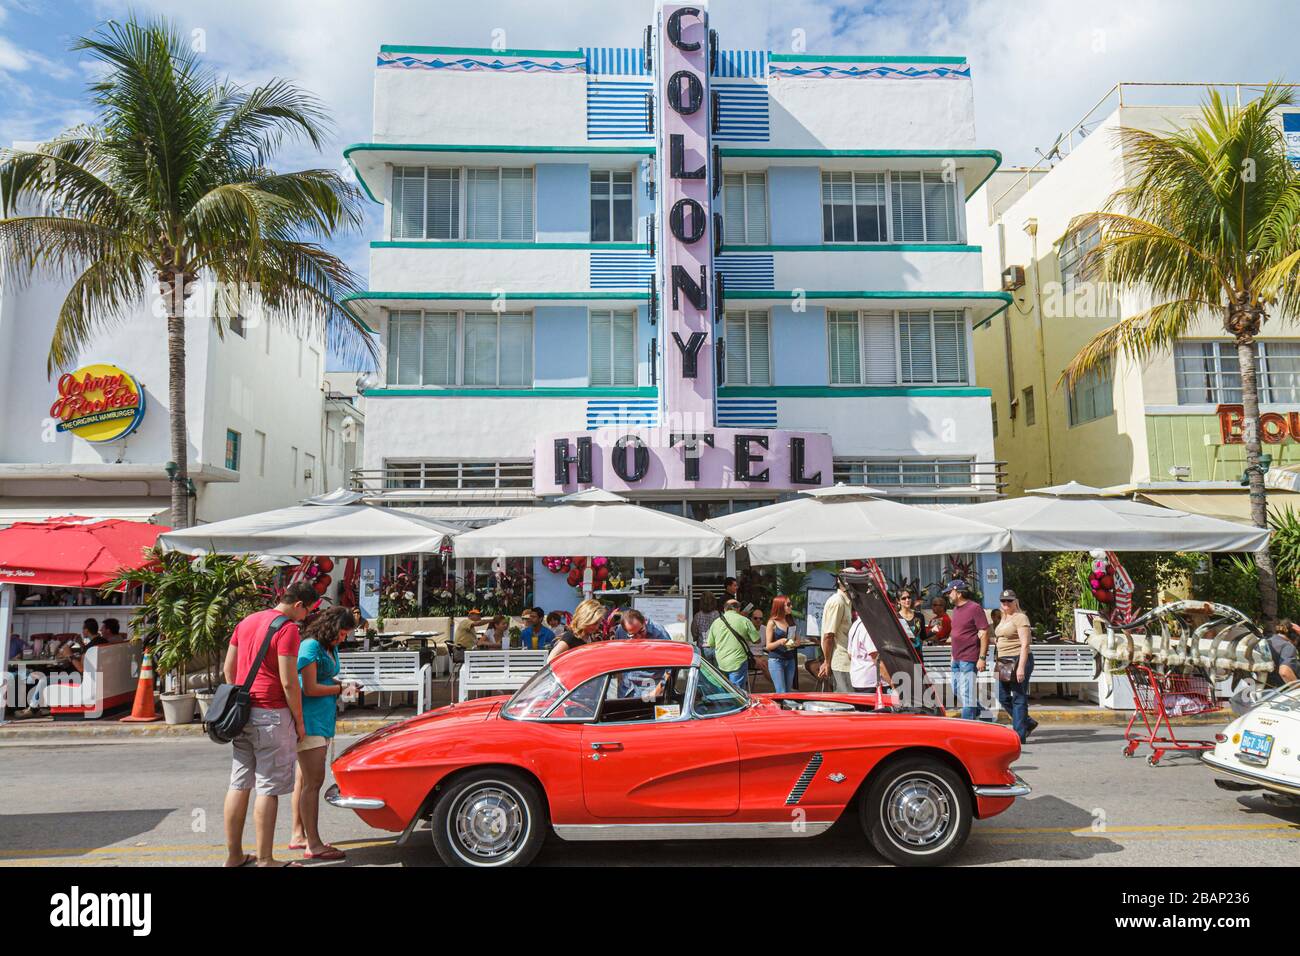 Miami Beach Florida,Ocean Drive,Art Deco Weekend,festival,fair,classic car cars,Chevrolet Corvette,Colony,hotel hotels lodging inn motel motels,visito Stock Photo